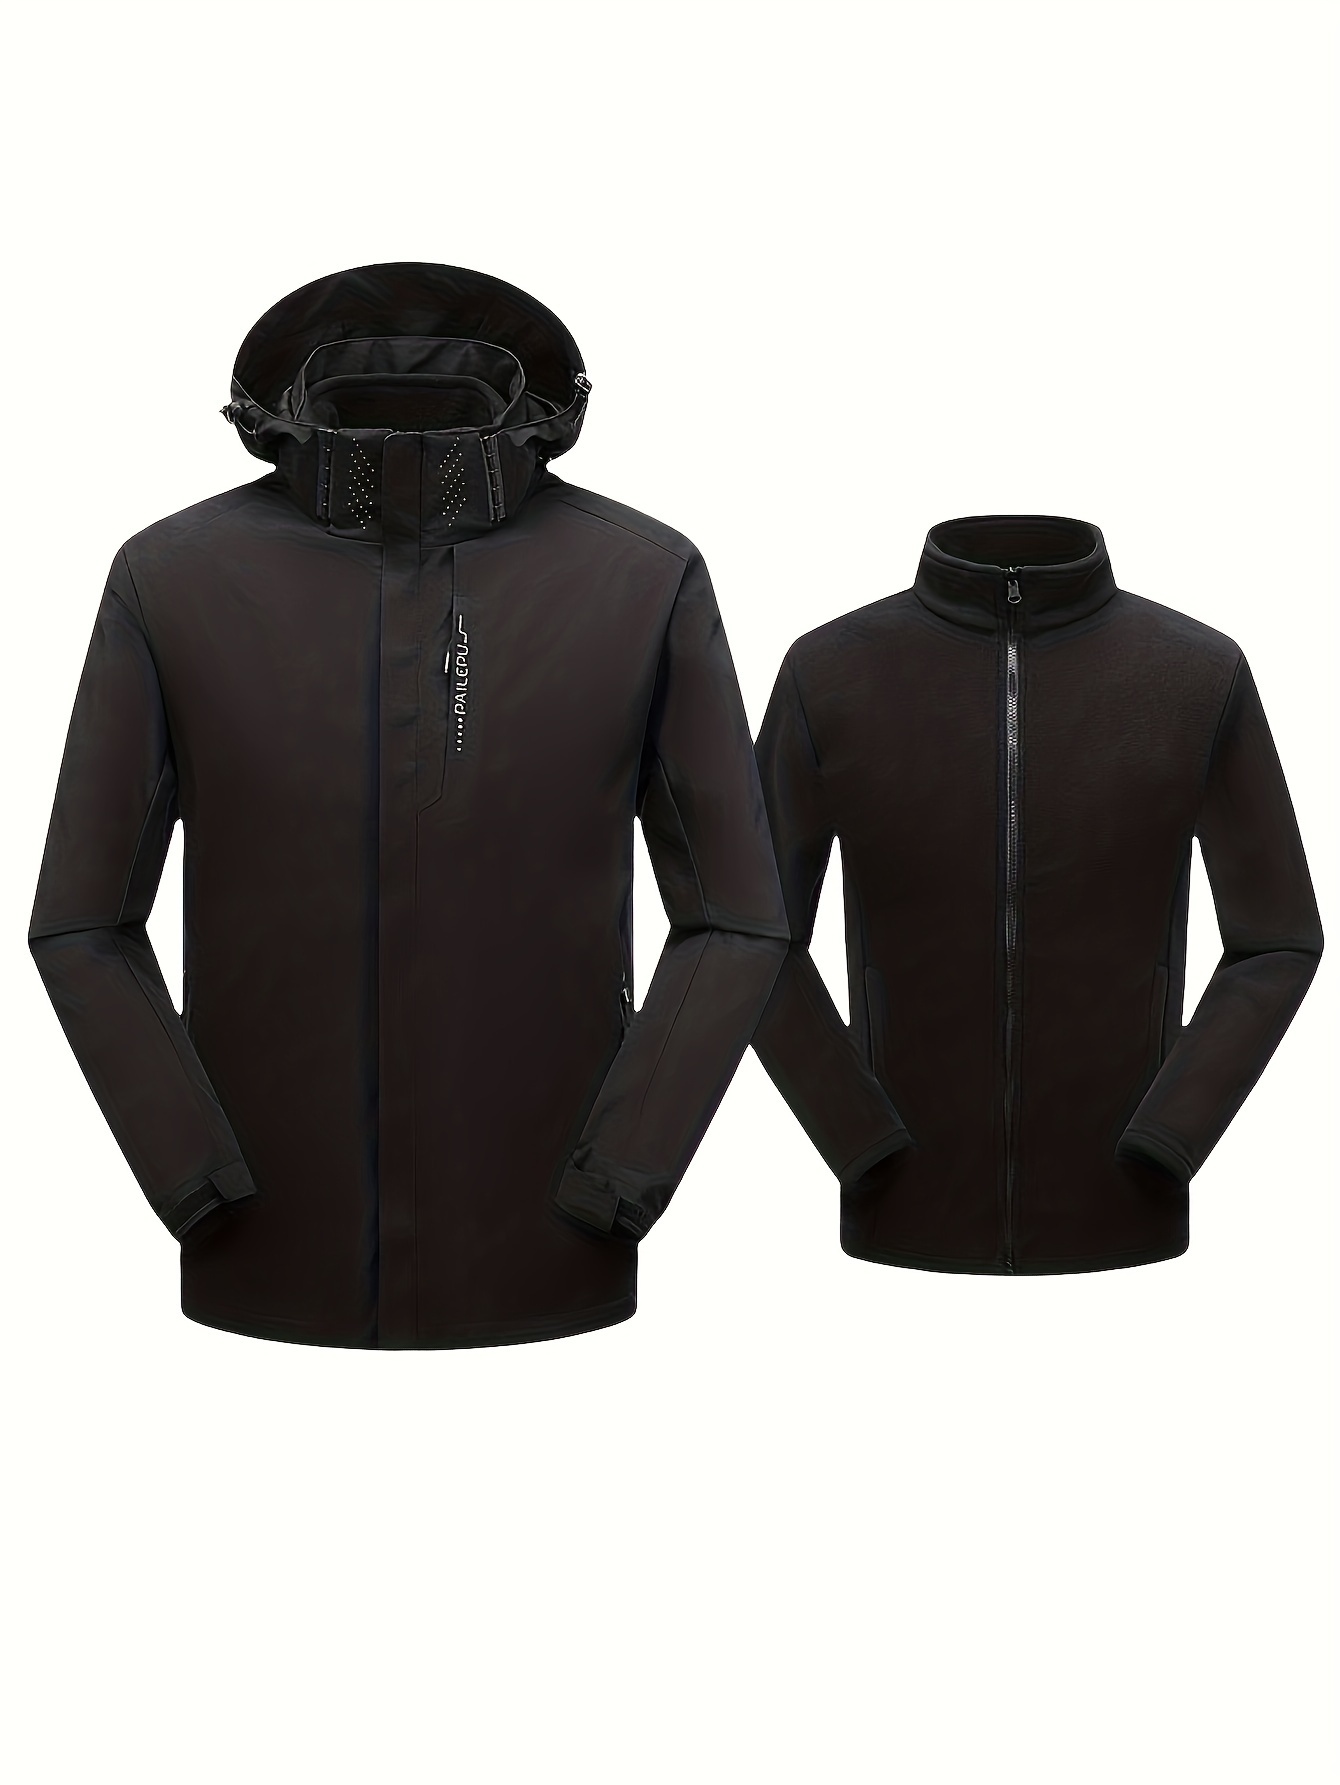 Men's jacket with removable fleece liner